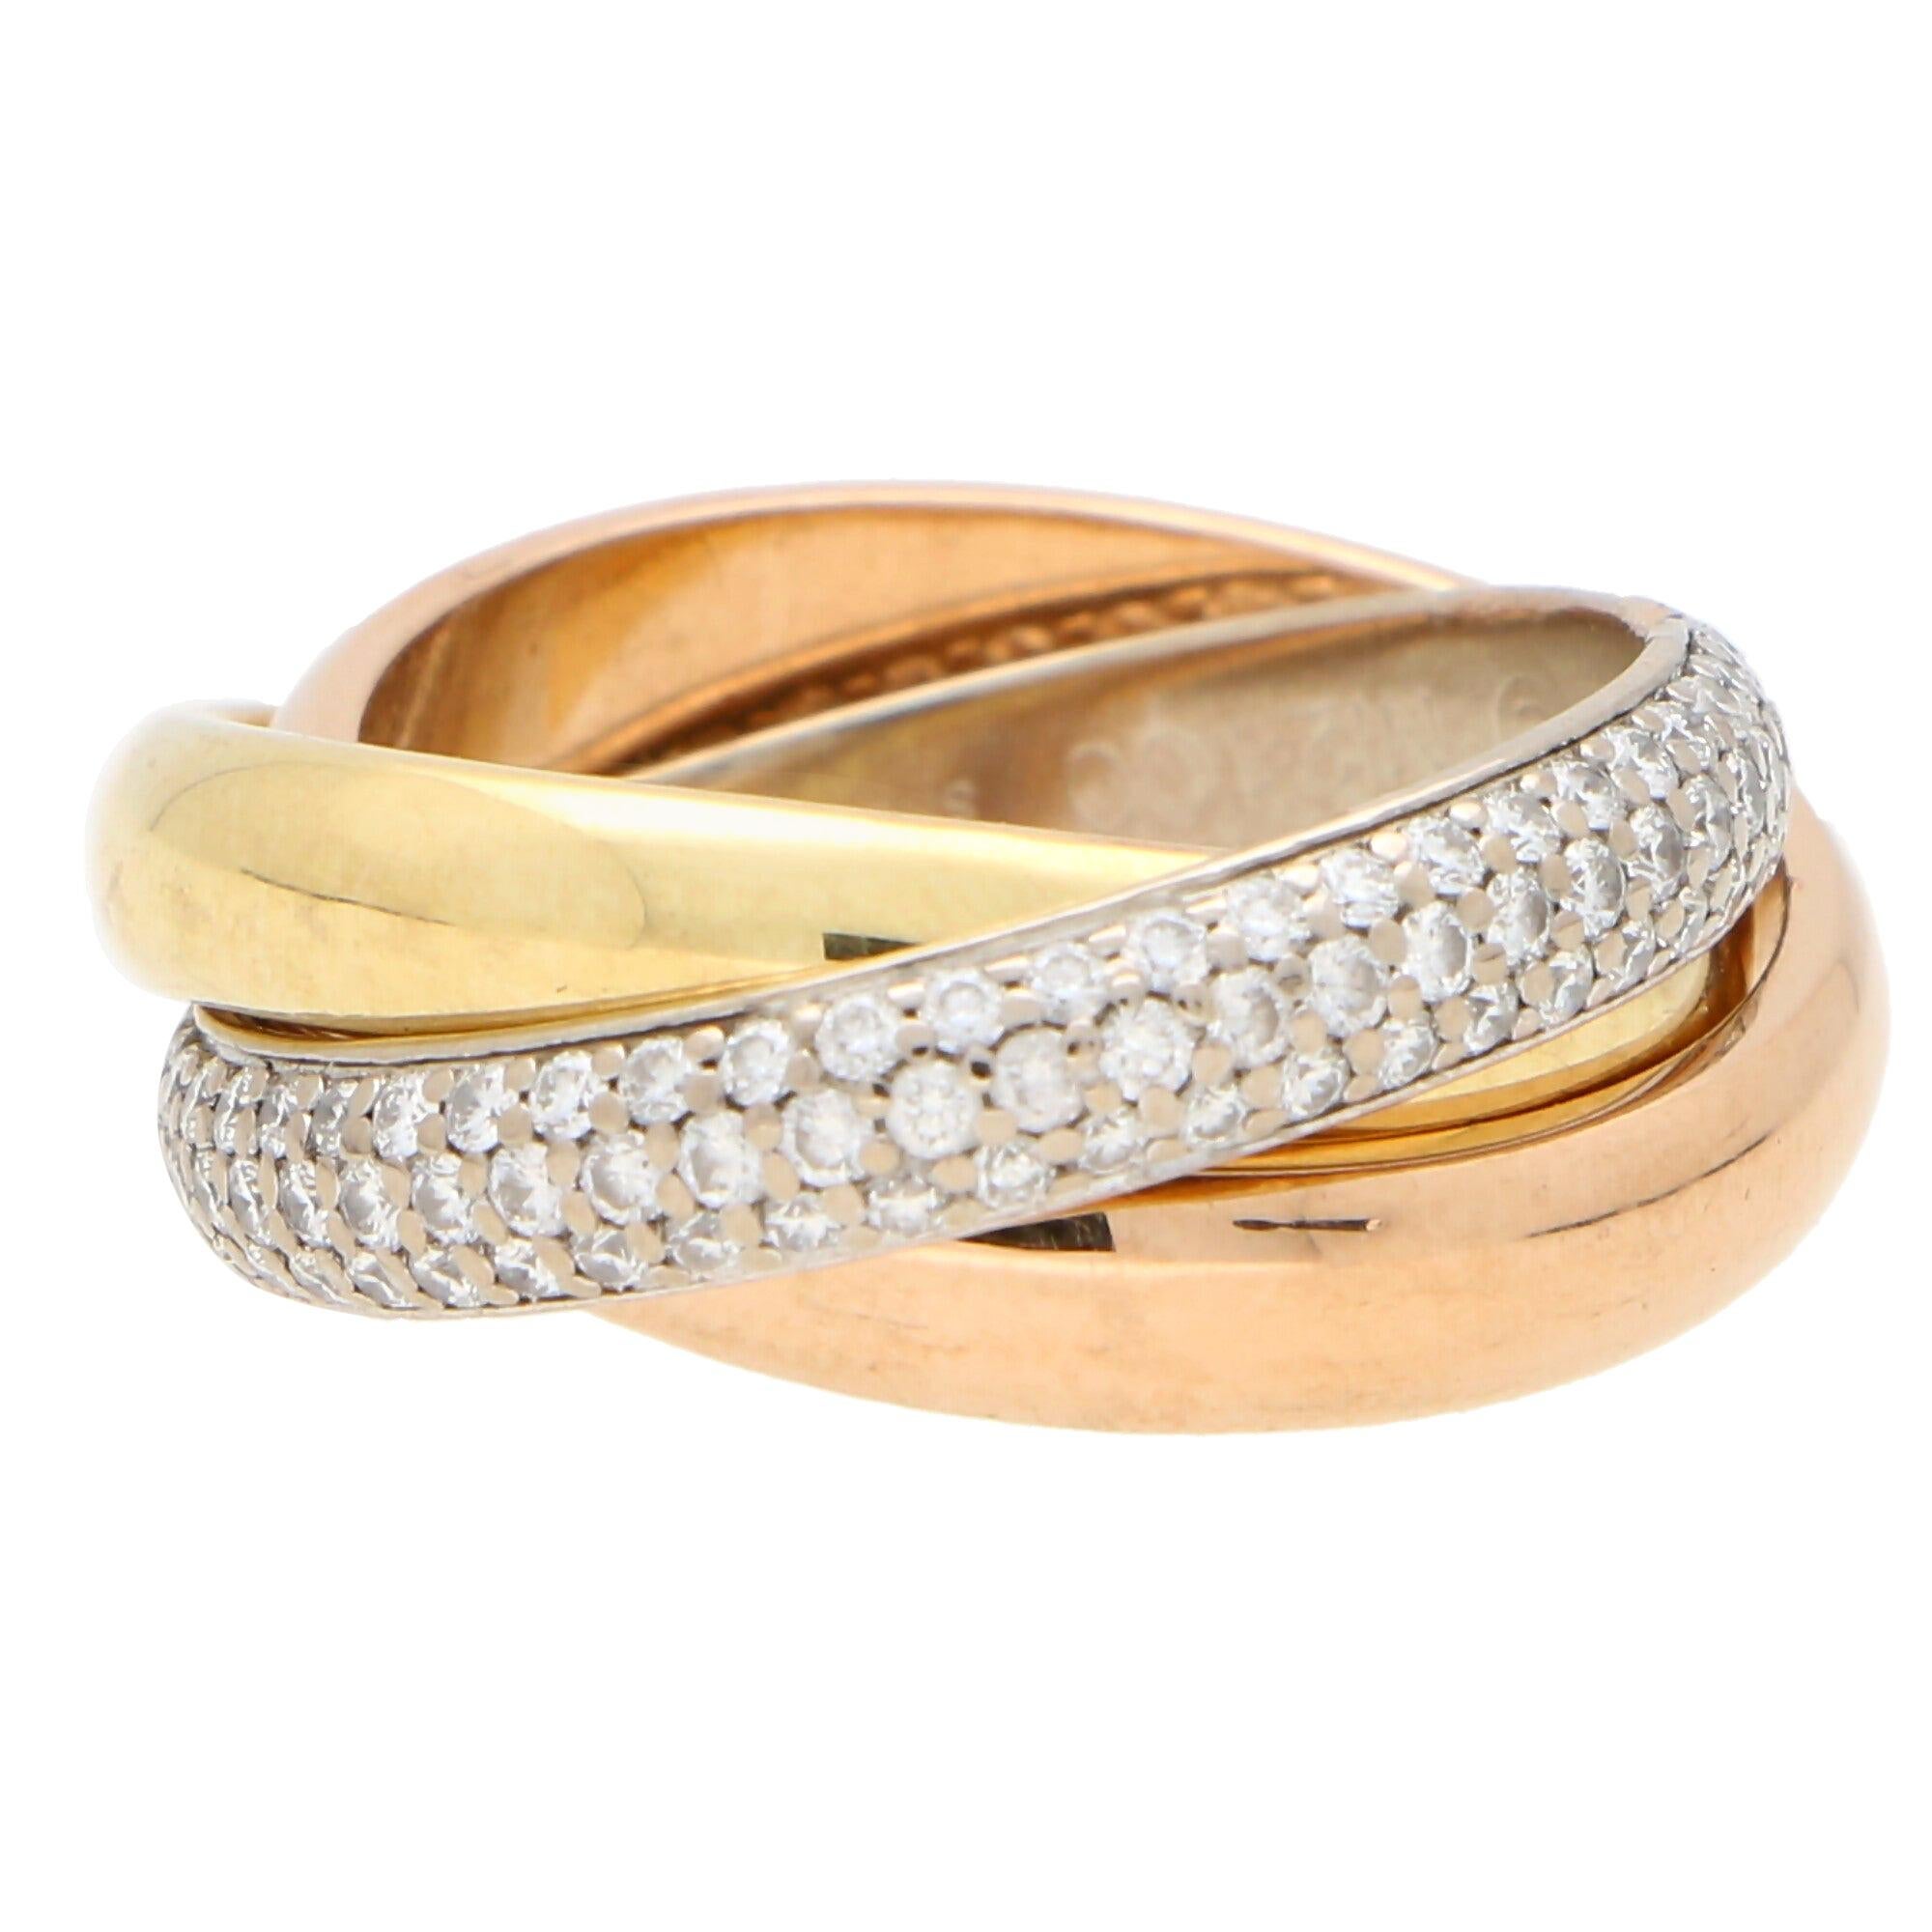 Vintage Cartier Diamond Trinity Ring Set in 18k Tri-Gold, Size 52